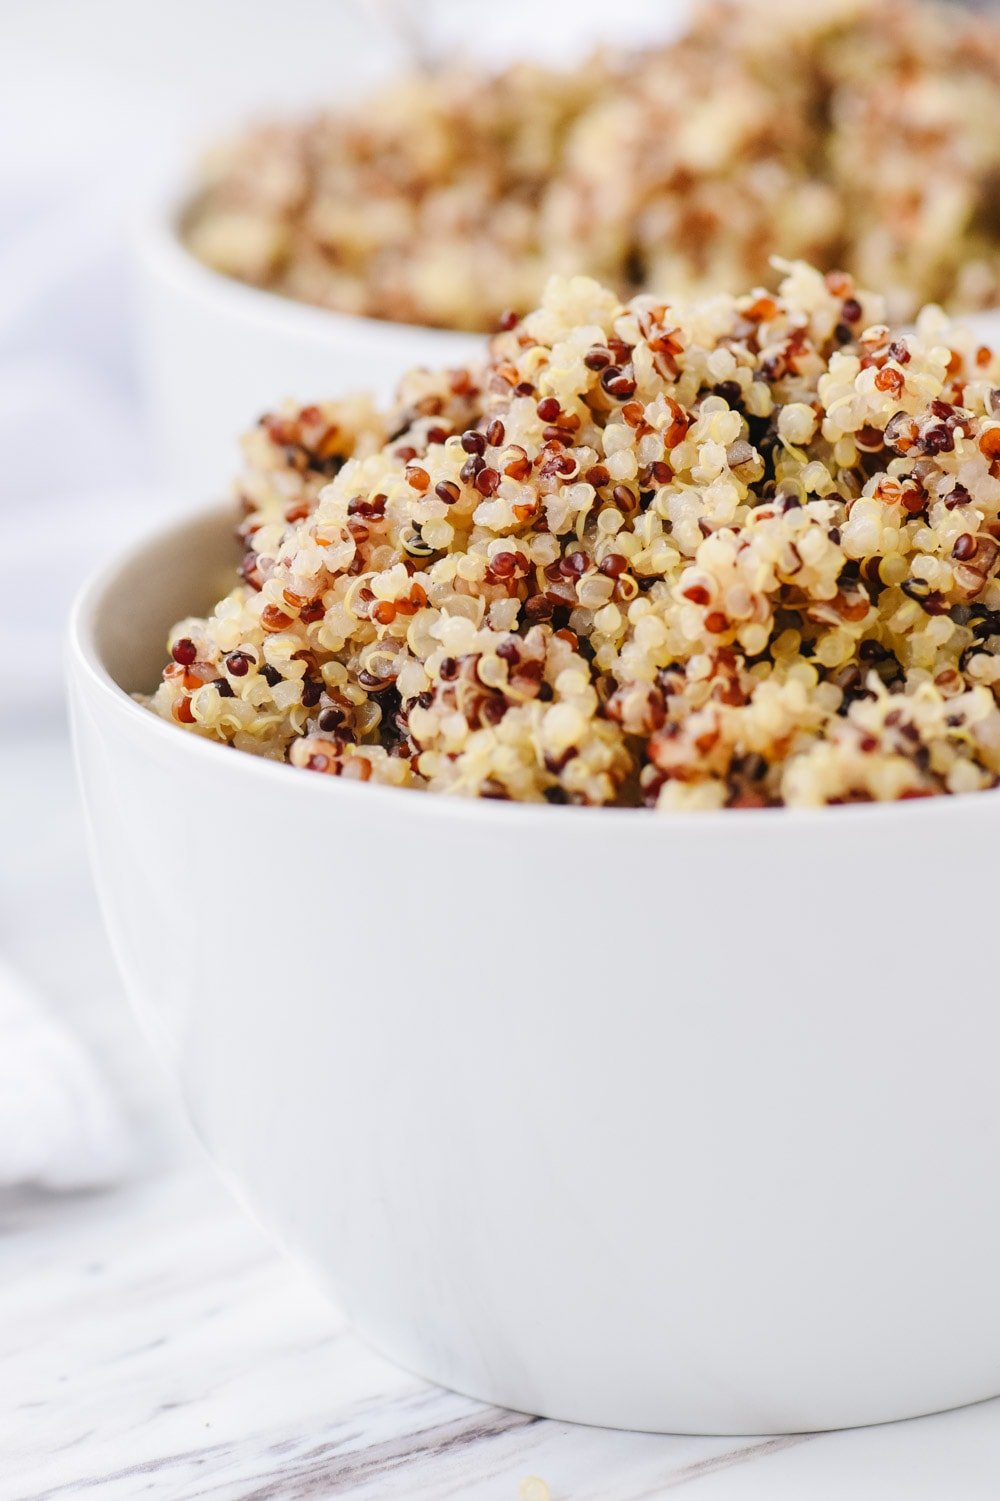 CLose up of a bowl of quinoa